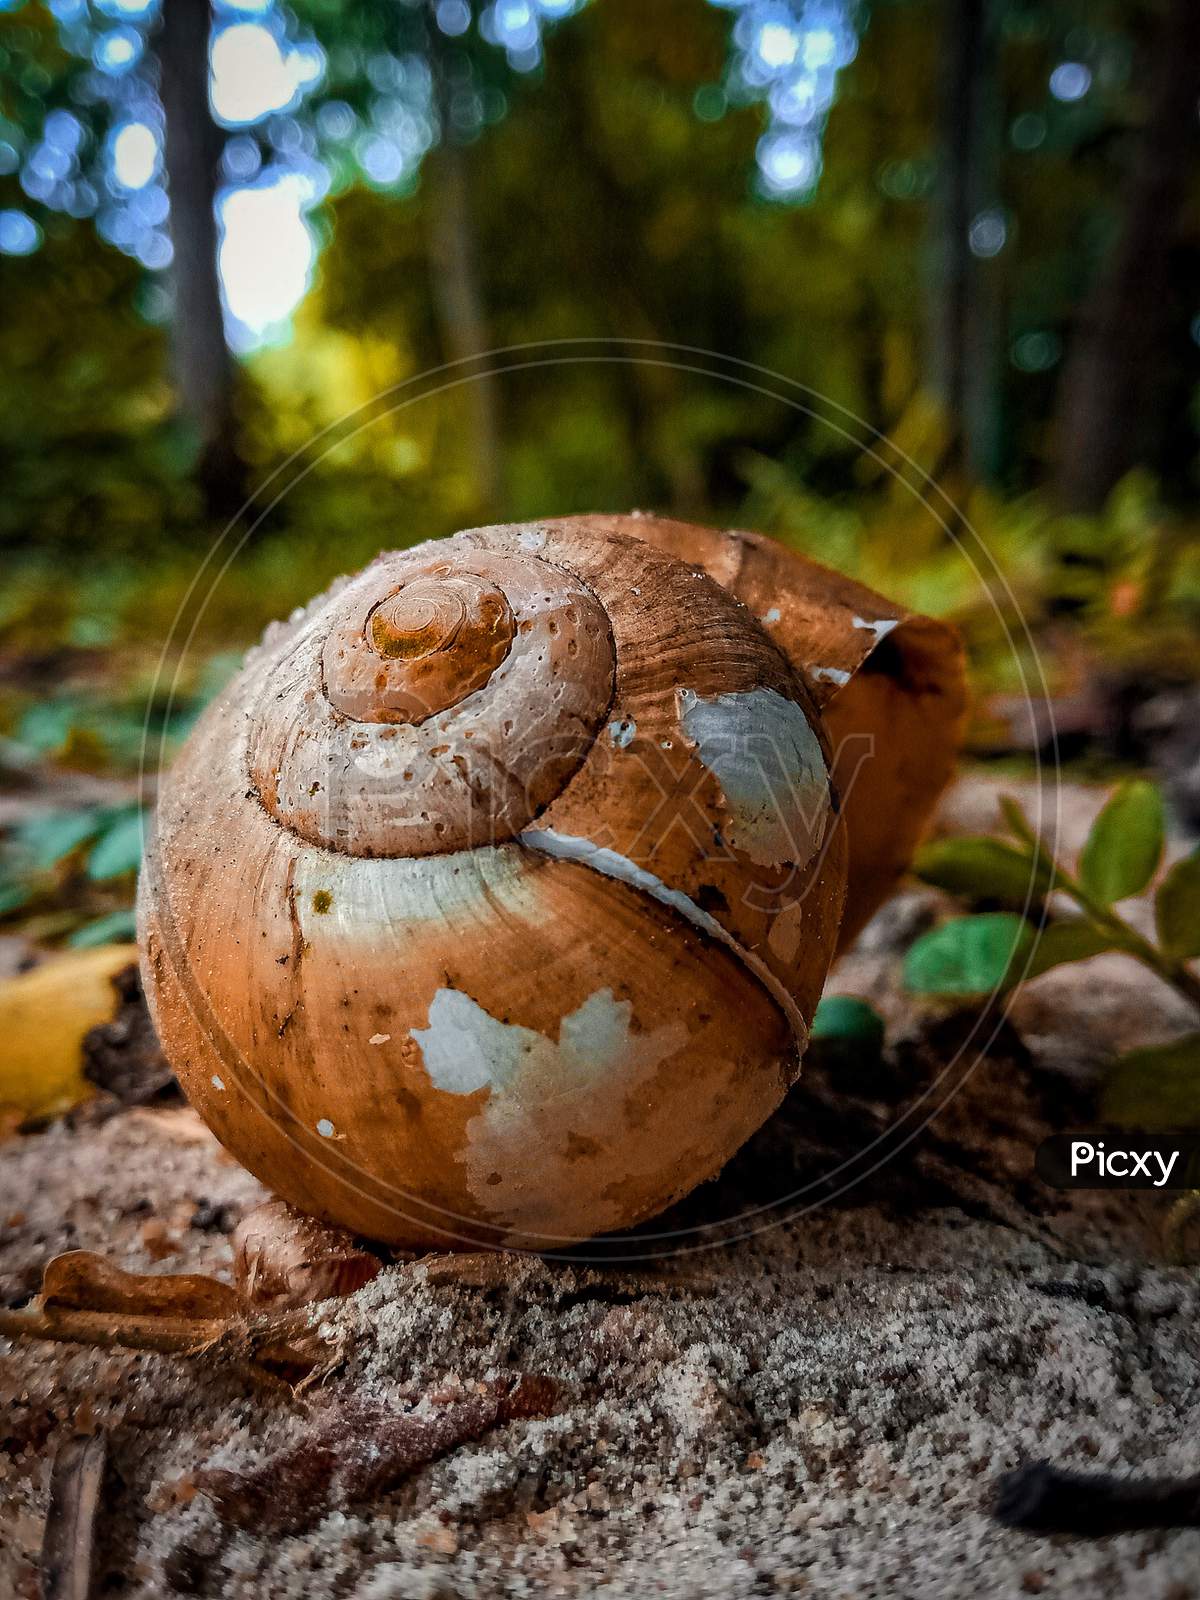 The snail..